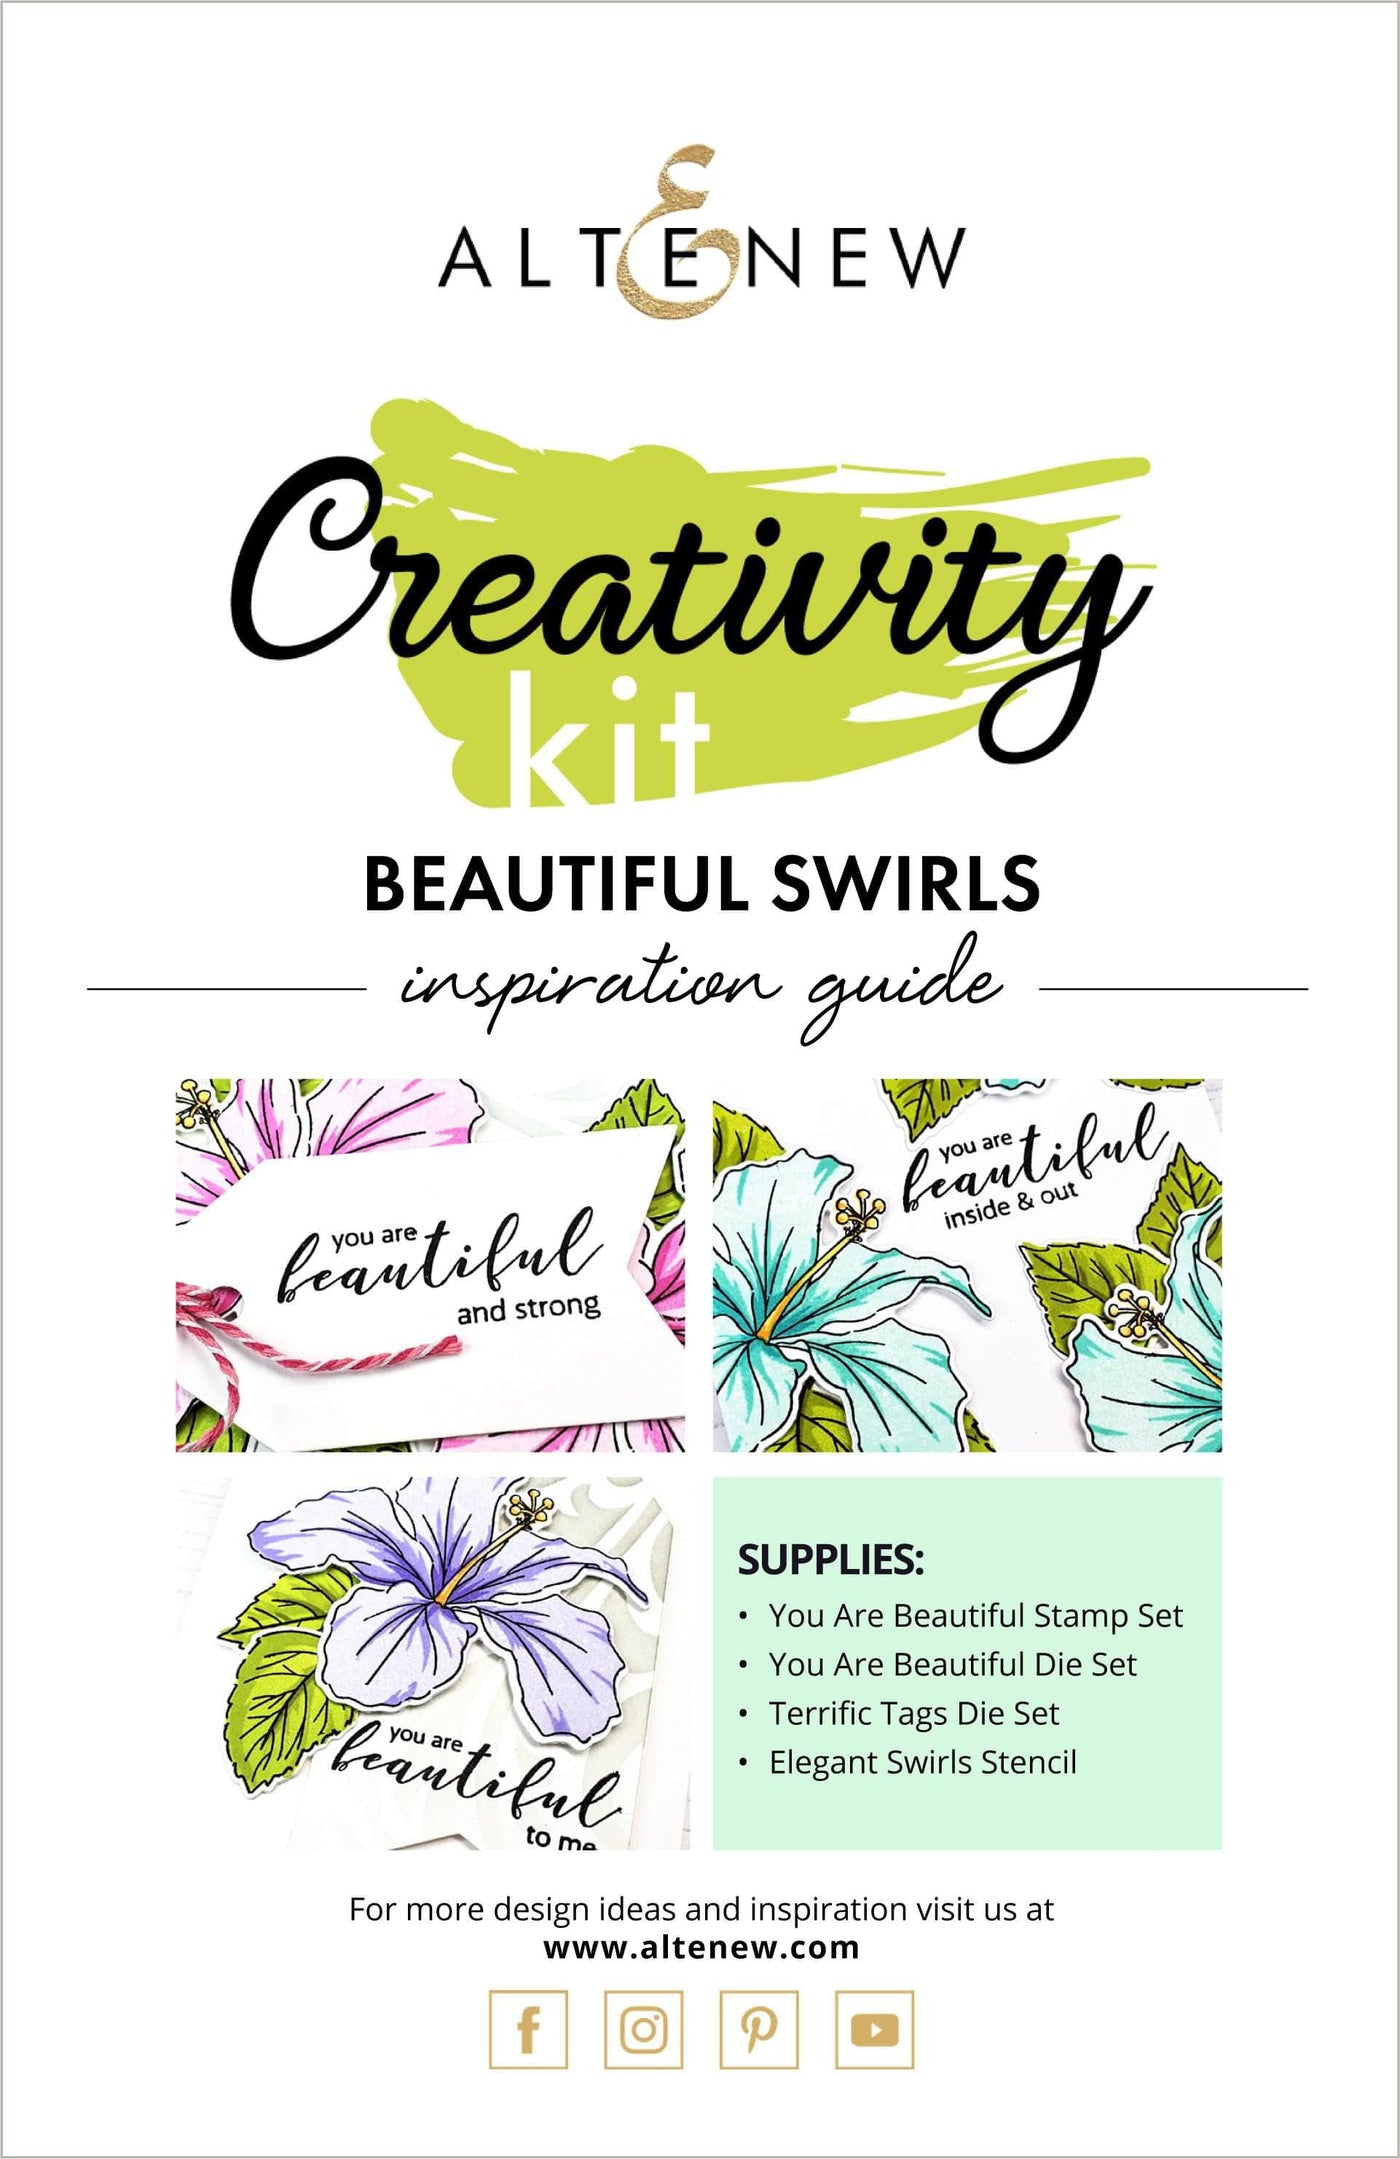 55Printing.com Printed Media Beautiful Swirls Creativity Cardmaking Kit Inspiration Guide